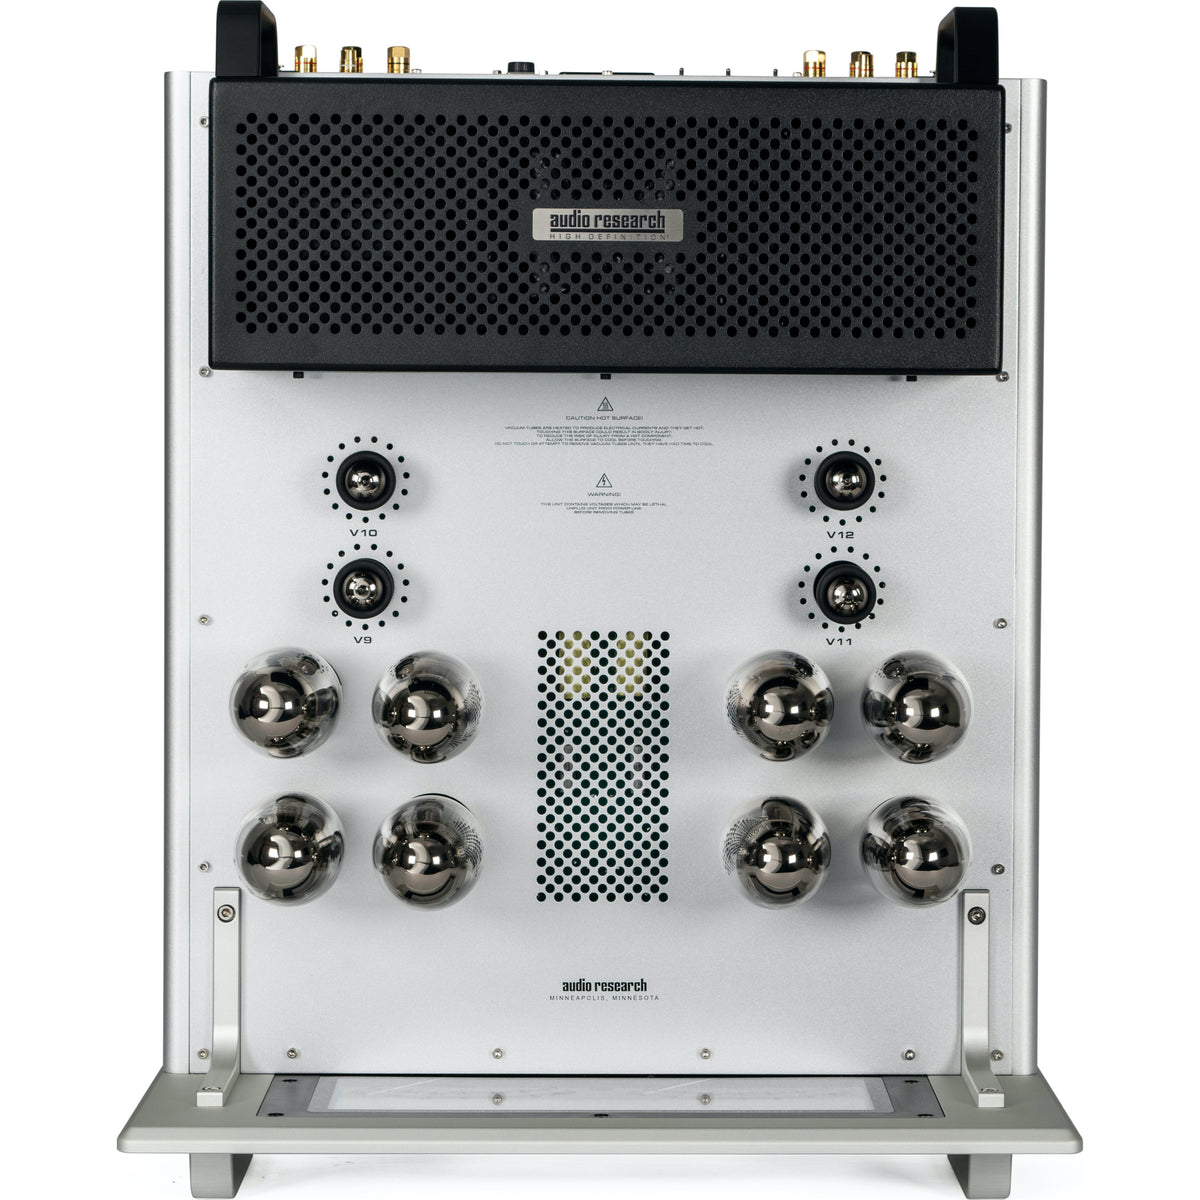 REF160S Amplifier